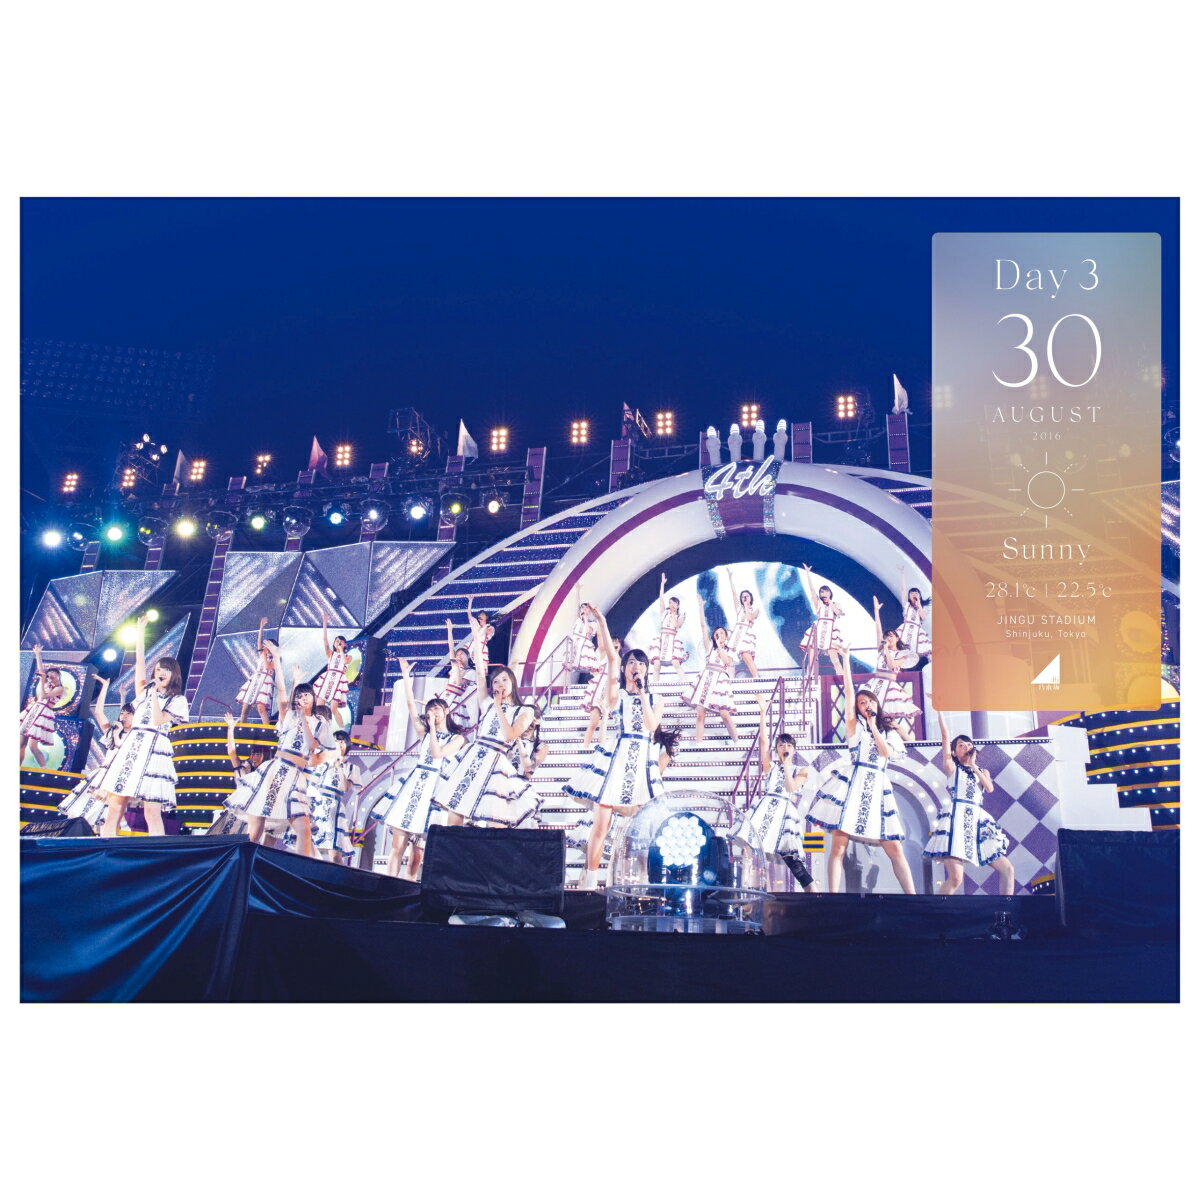 乃木坂46 4th YEAR BIRTHDAY LIVE 2016.8.28-30 JINGU STADIUM Day3【Blu-ray】 乃木坂46